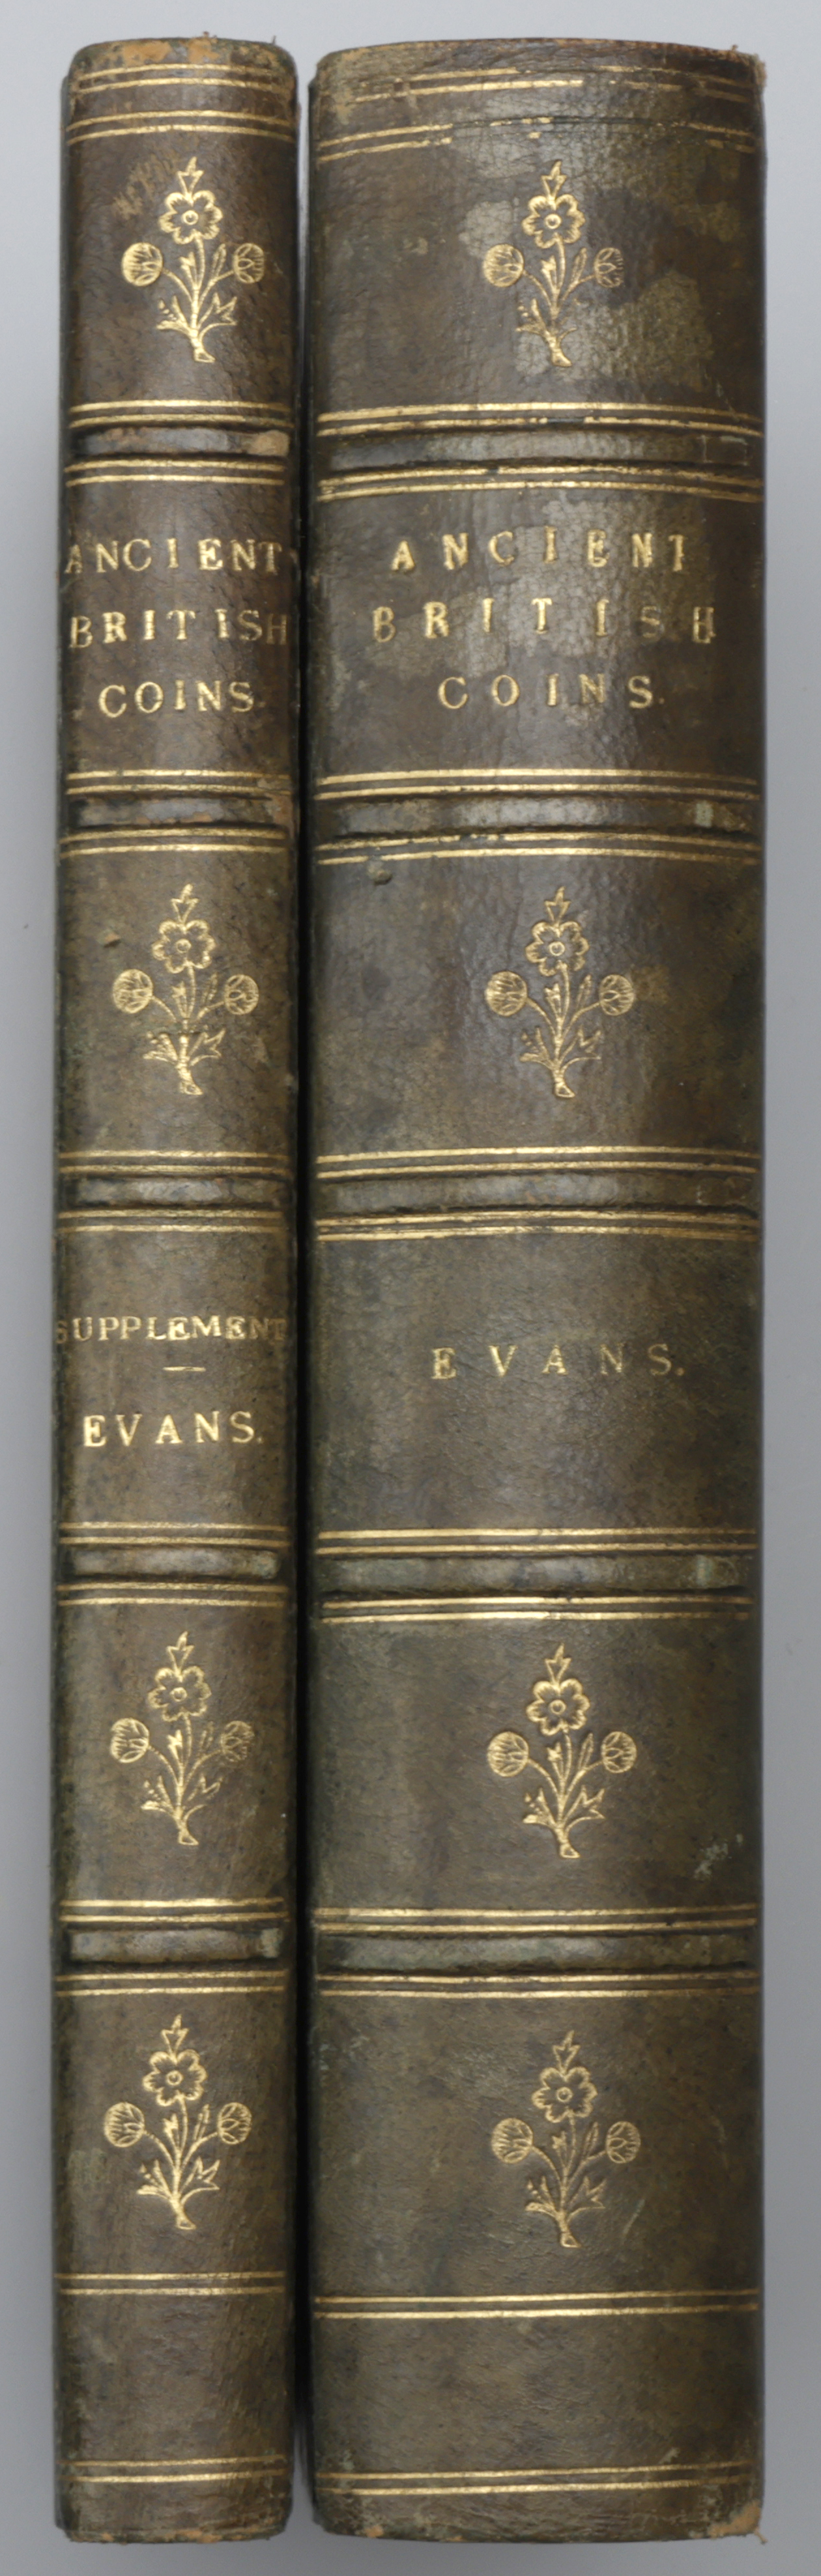 Evans, J., The Coins of the Ancient Britons, 2 vols, London, 1864 & 1890, xix + 599pp, 23 pl...